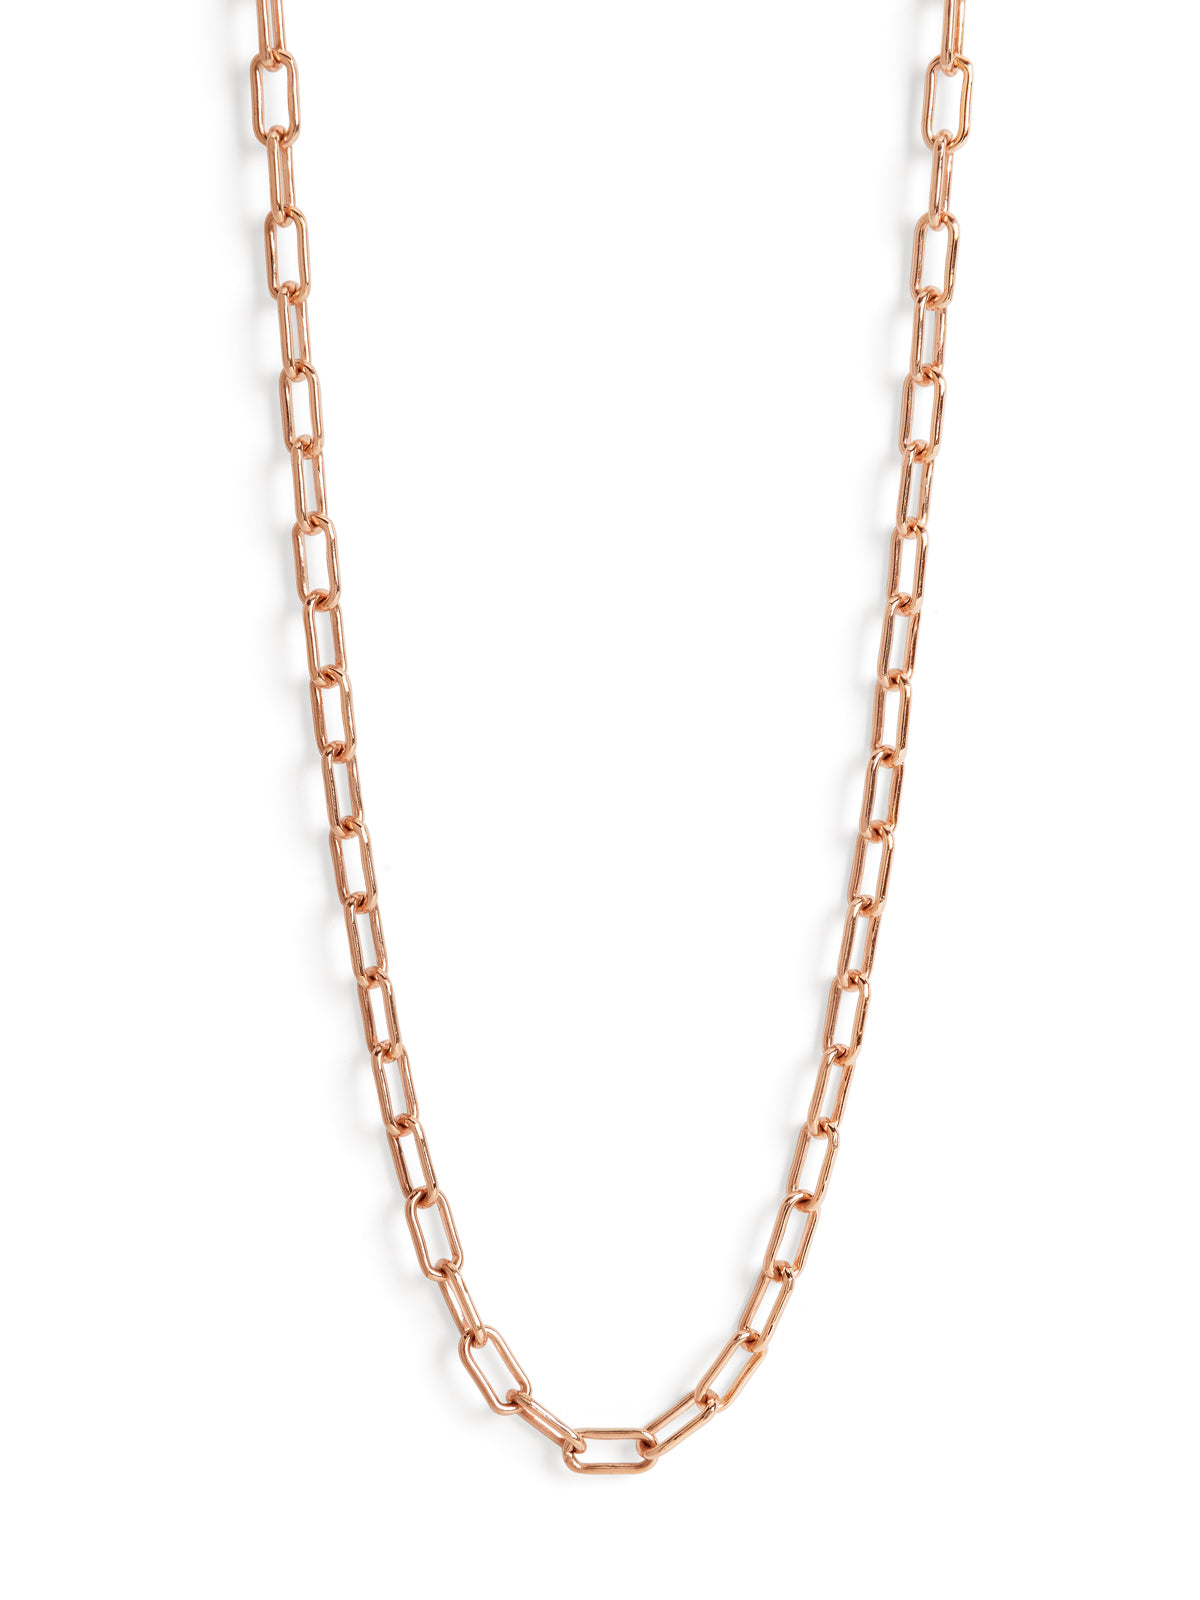 Photos - Pendant / Choker Necklace 3.2mm Rose Gold Rectangular Link Chain, 18